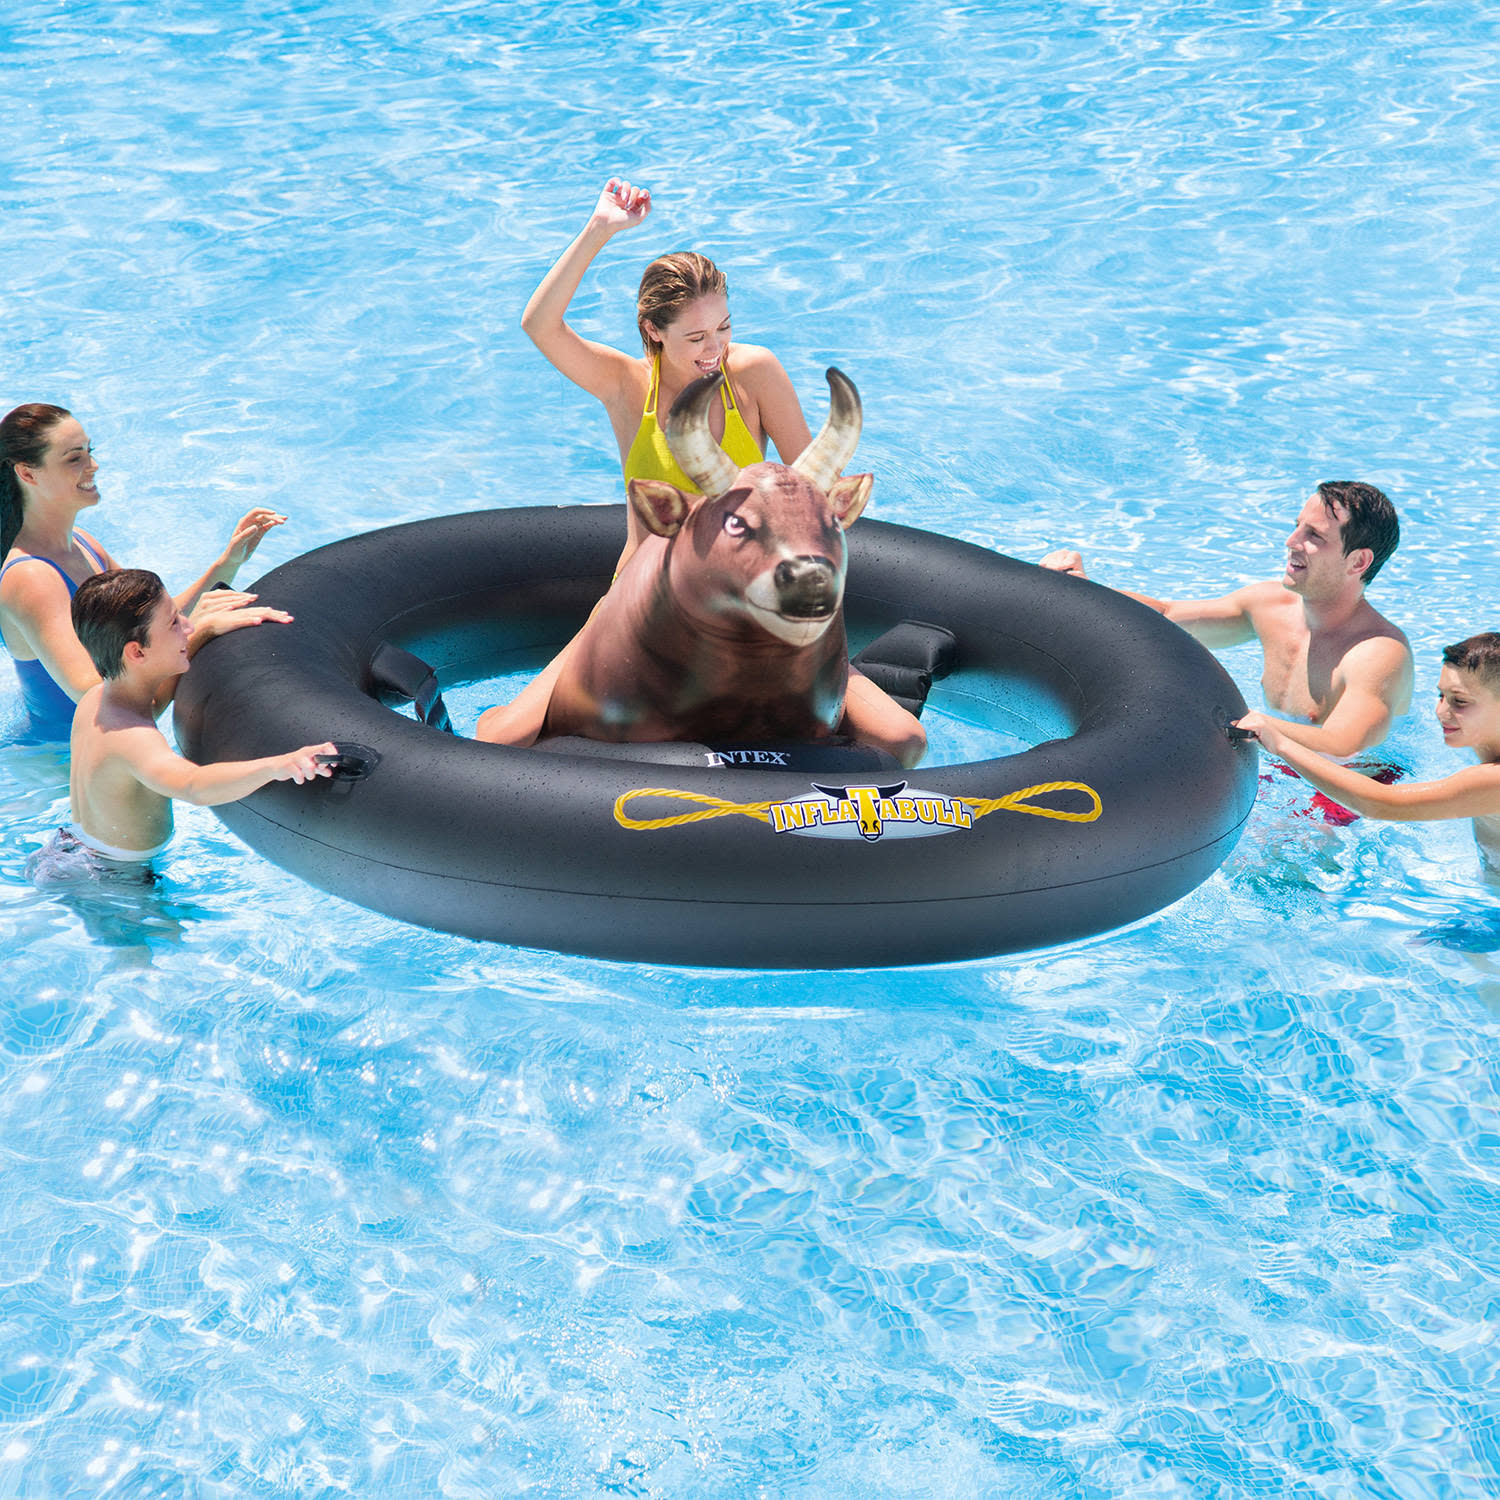 INTEX Giant Inflatabull Fun Bull-Riding Inflatable Swimming Pool ...